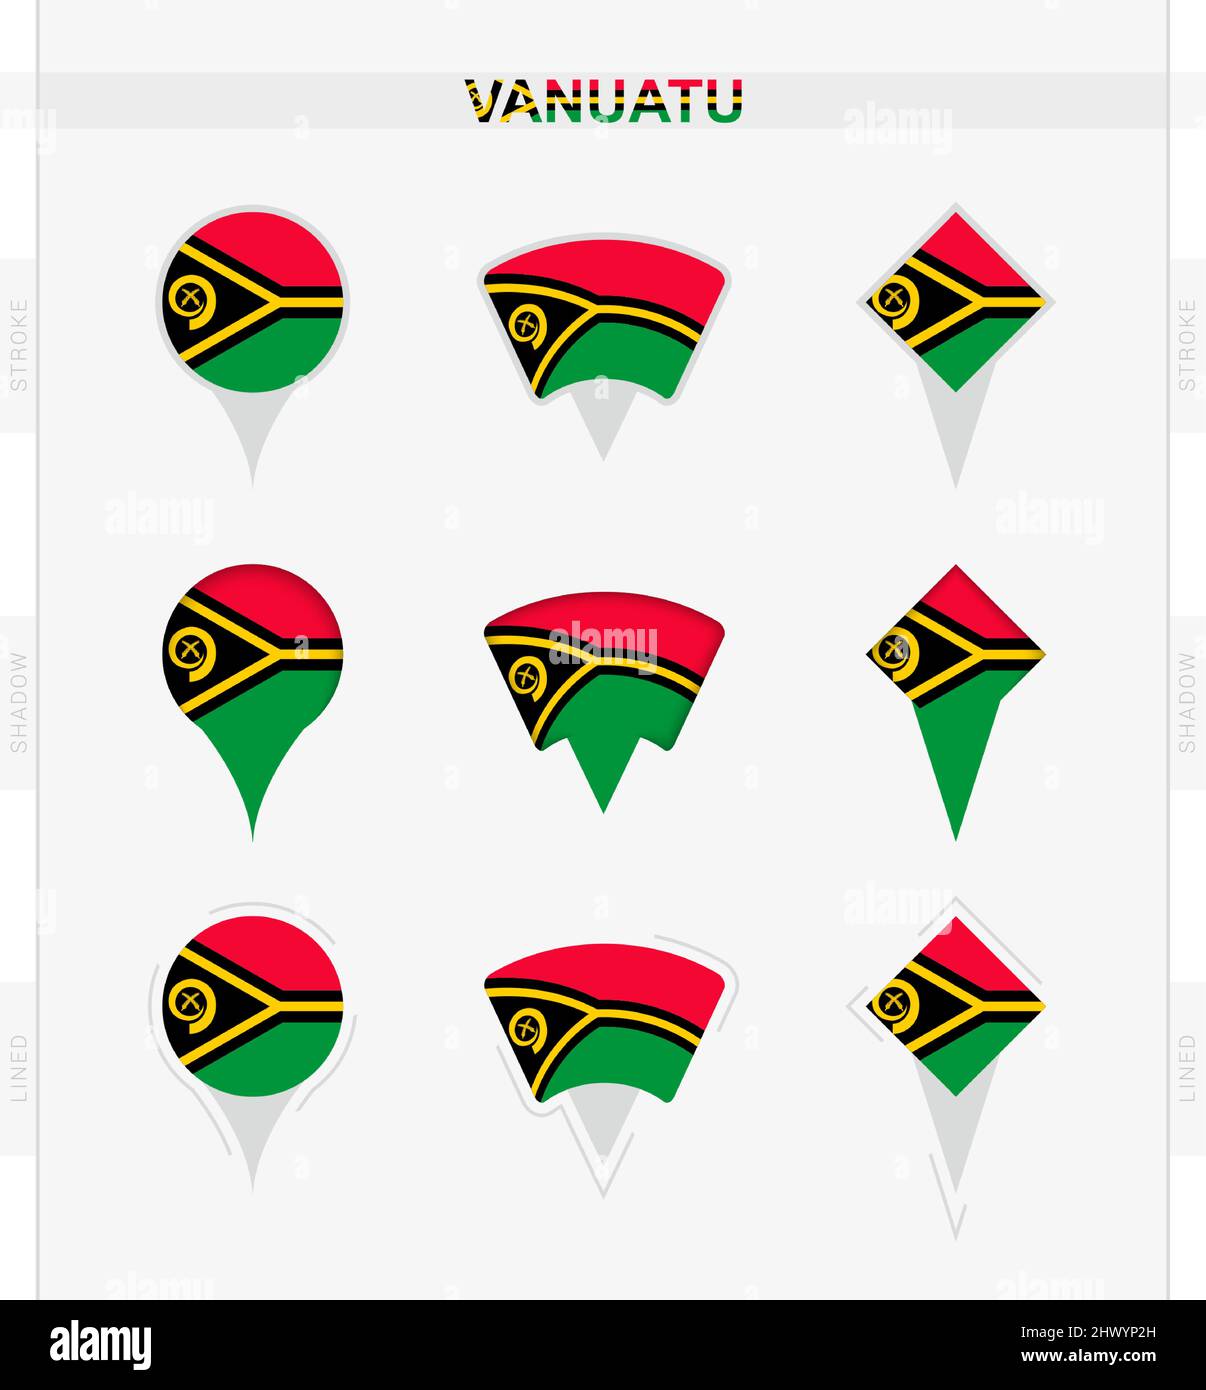 Vanuatu-Flagge, Satz von Positionsnadelikonen der Vanuatu-Flagge. Vektordarstellung von nationalen Symbolen. Stock Vektor